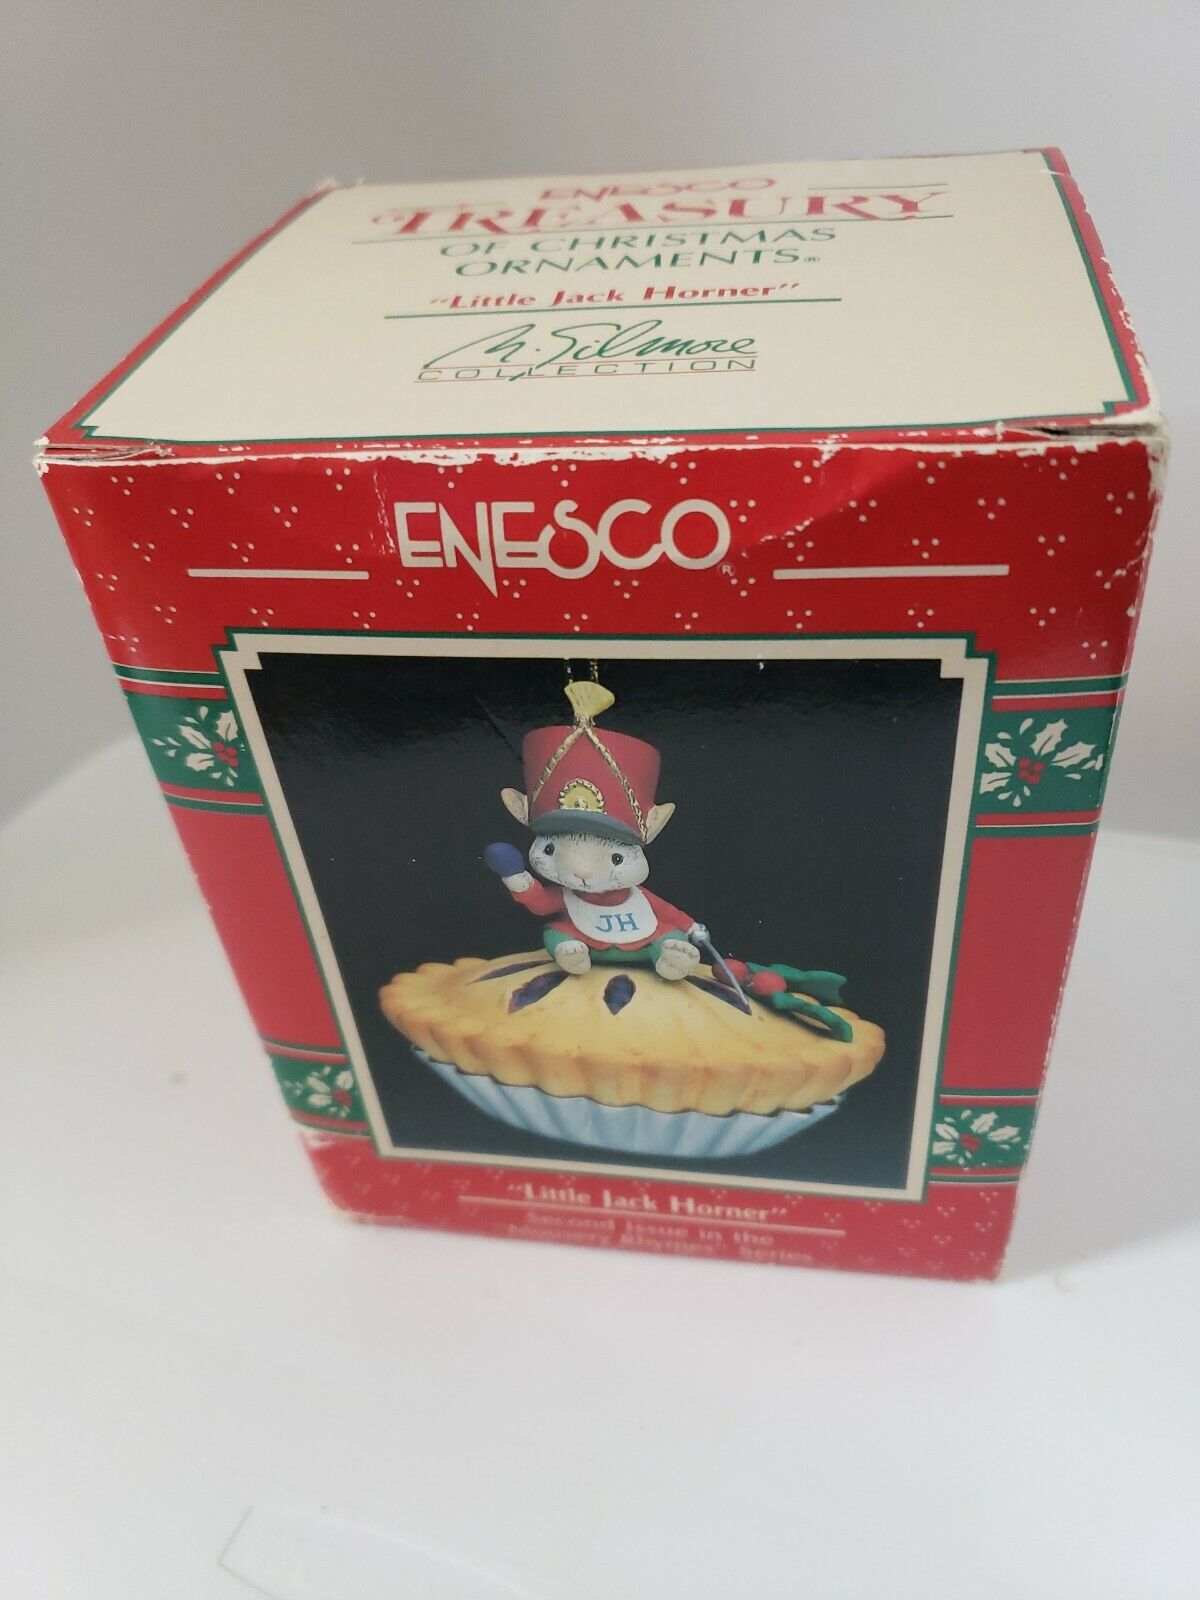 Enesco #574058 Little Jack Horner Hanging Ornament 2nd in Series 1990, 1991 Rare